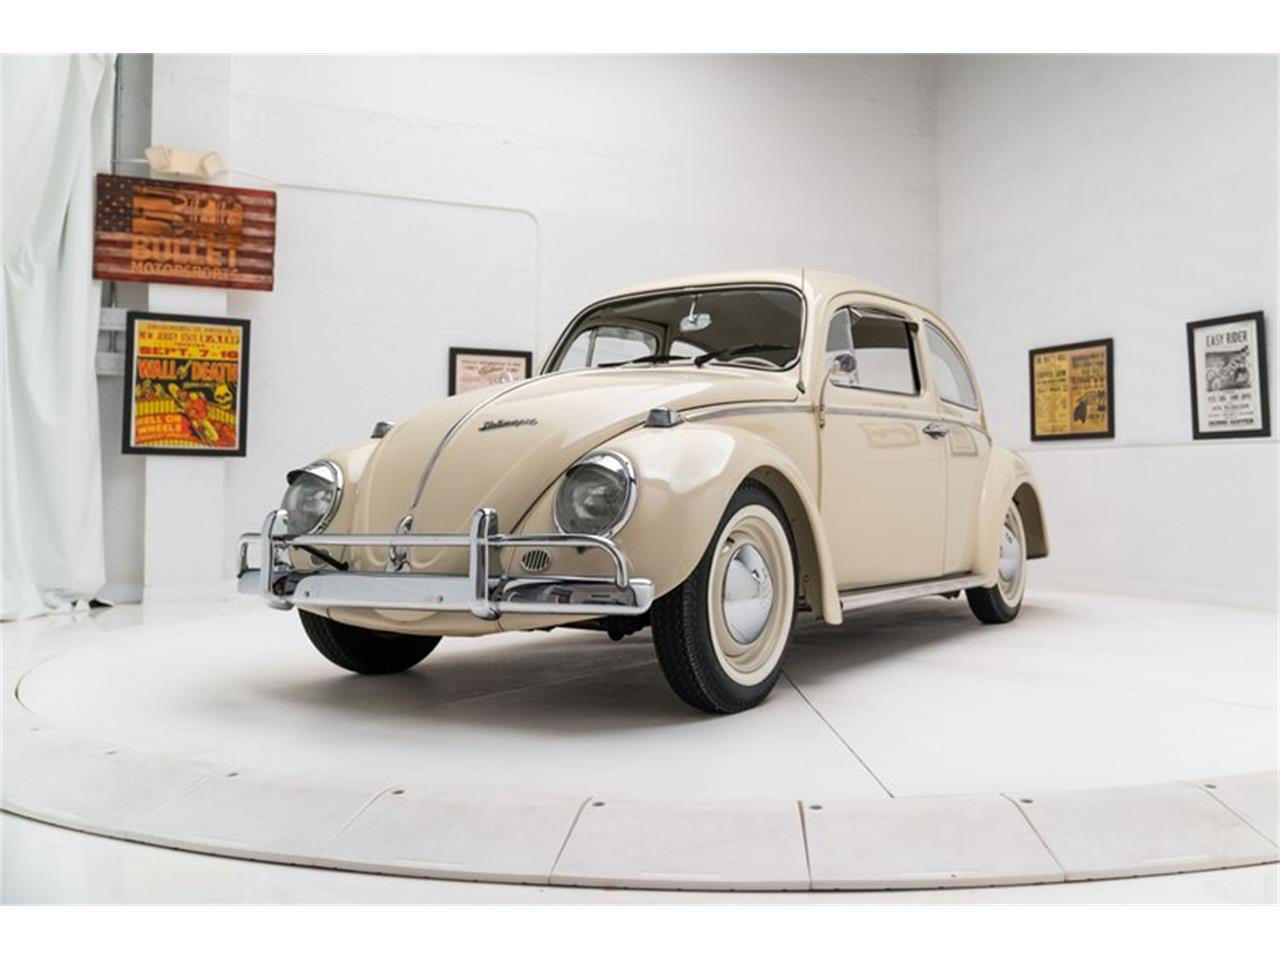 For Sale: 1966 Volkswagen Beetle in Fort Lauderdale, Florida for sale in Fort Lauderdale, FL